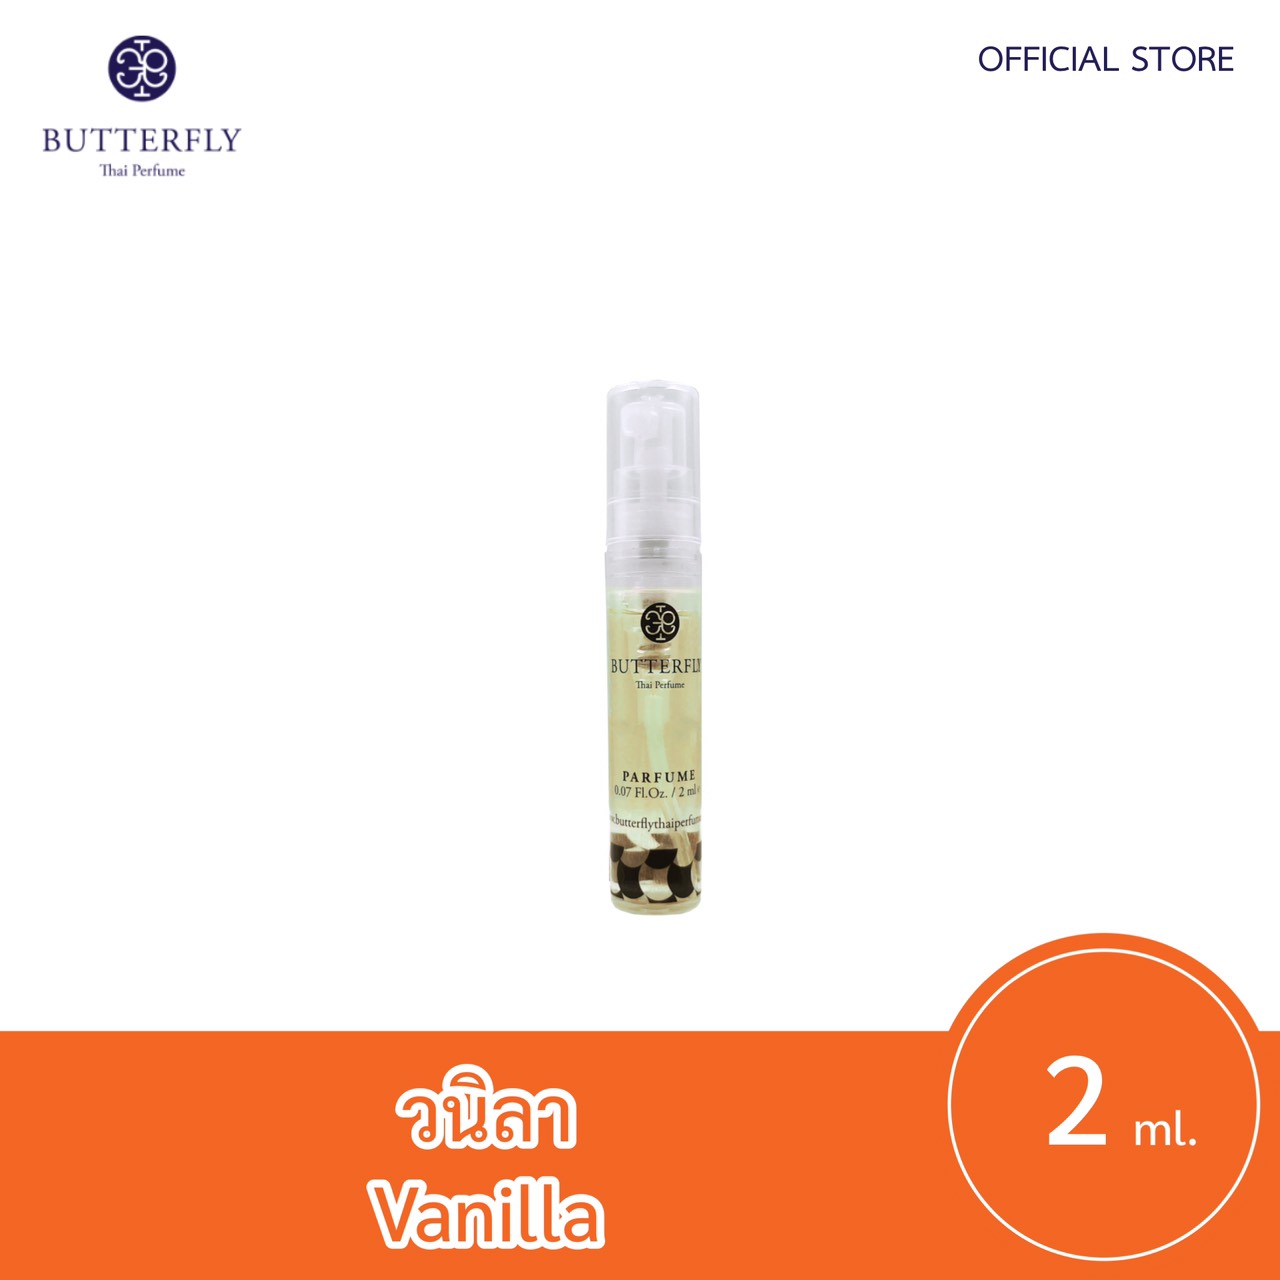 Butterfly Thai Perfume - น้ำหอมบัตเตอร์ฟลาย ไทย เพอร์ฟูม  ขนาดทดลอง 2ml.  กลิ่น วนิลาปริมาณ (มล.) 2